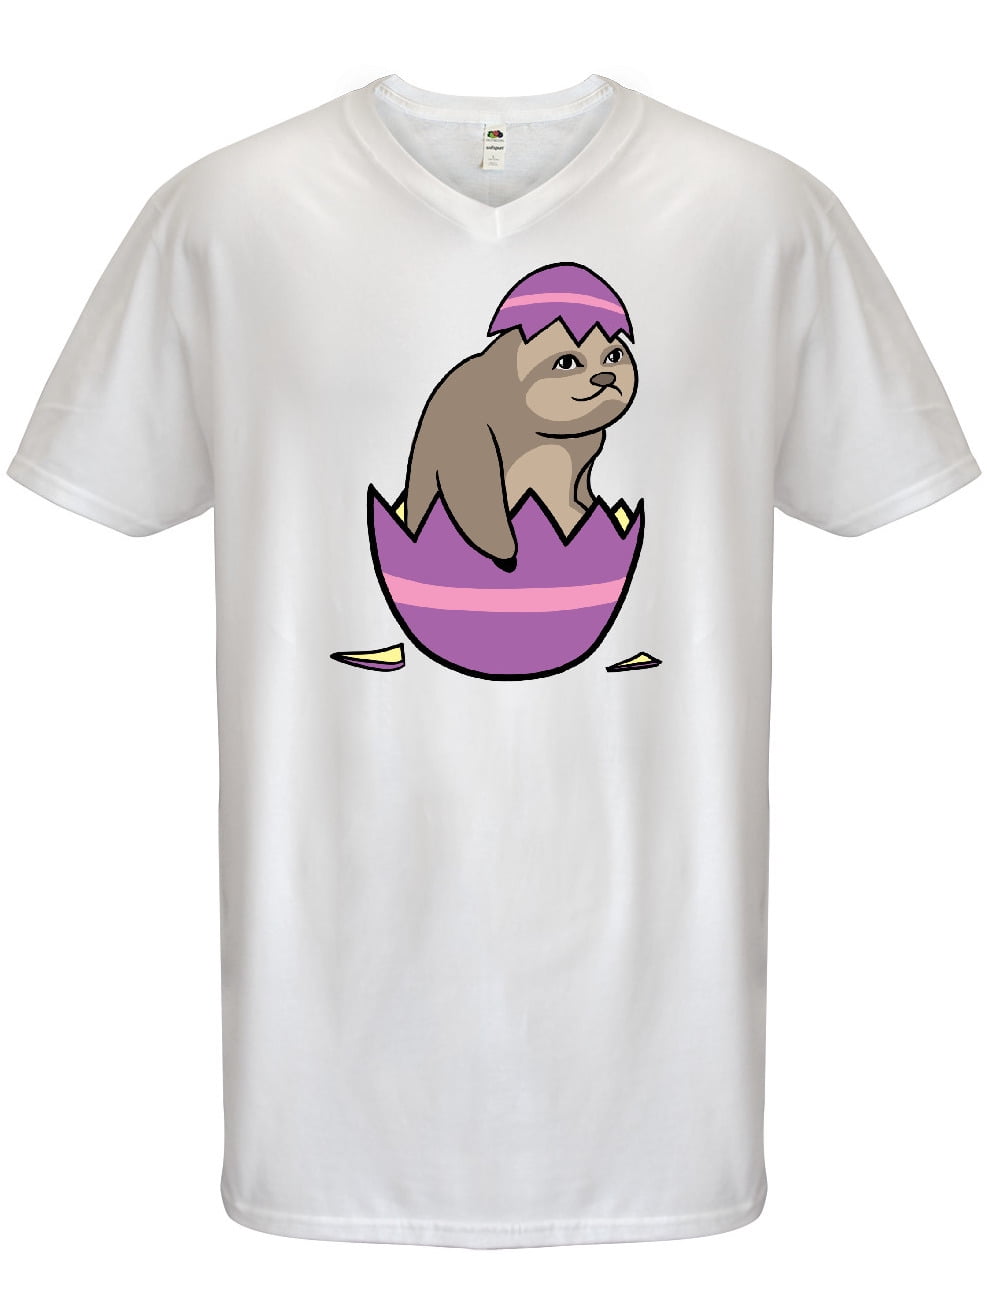 SHIRT1-KIDS Campfire Sloth Childrens Girls Short Sleeve Ruffles Shirt T-Shirt for 2-6T